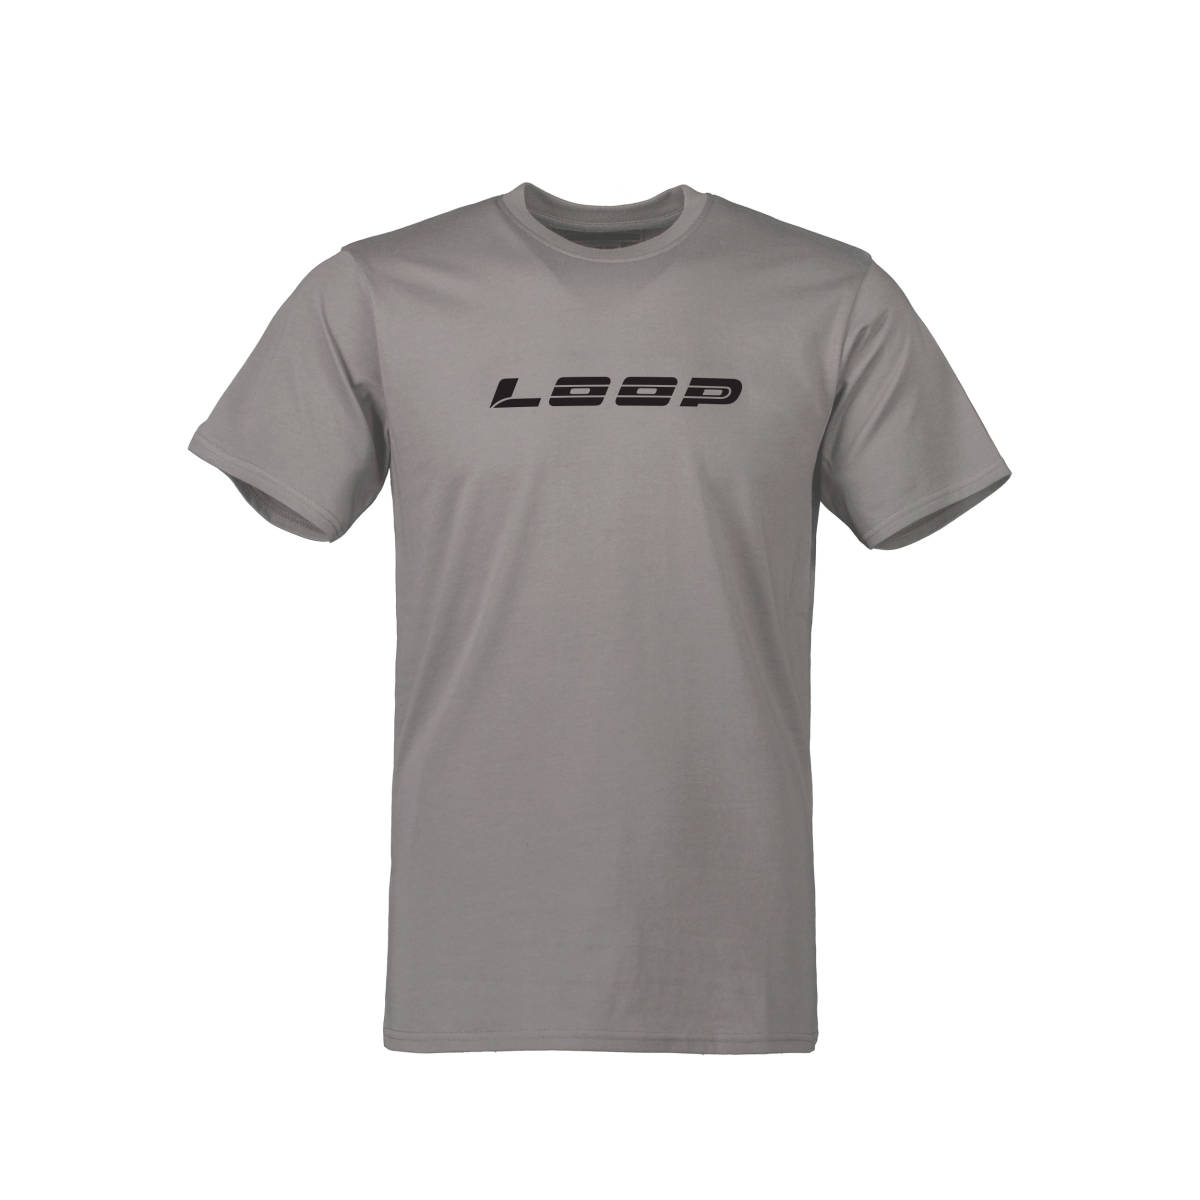  петля Loop Logo футболка темный серый US-S